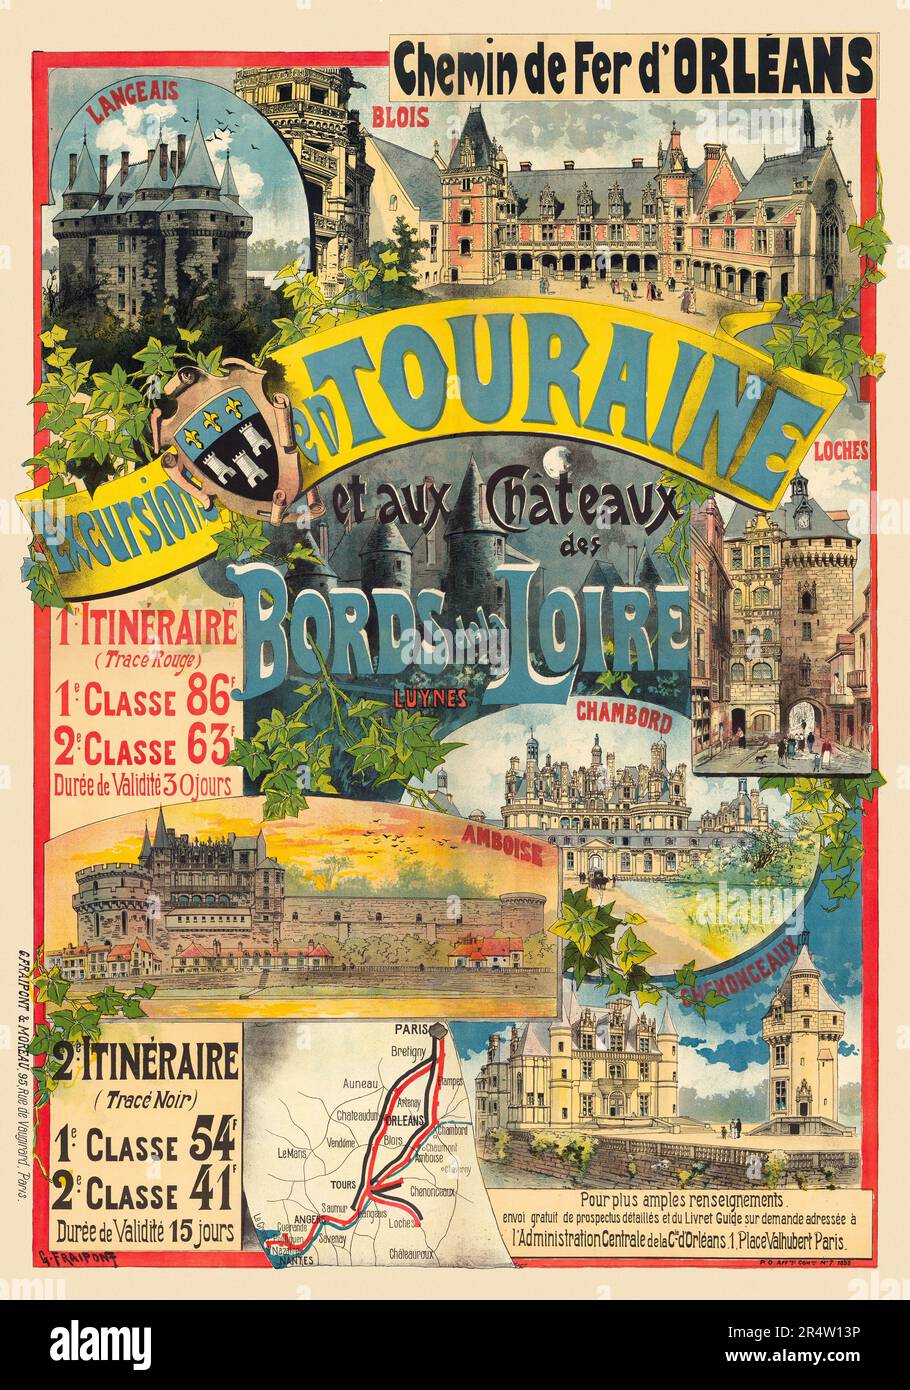 Chemin de Fer d'Orléans. Exkursionen en Touraine et aux Châteaux des Bords de la Loire von Gustave Fraipont (1849-1923). Poster wurde 1892 in Frankreich veröffentlicht. Stockfoto